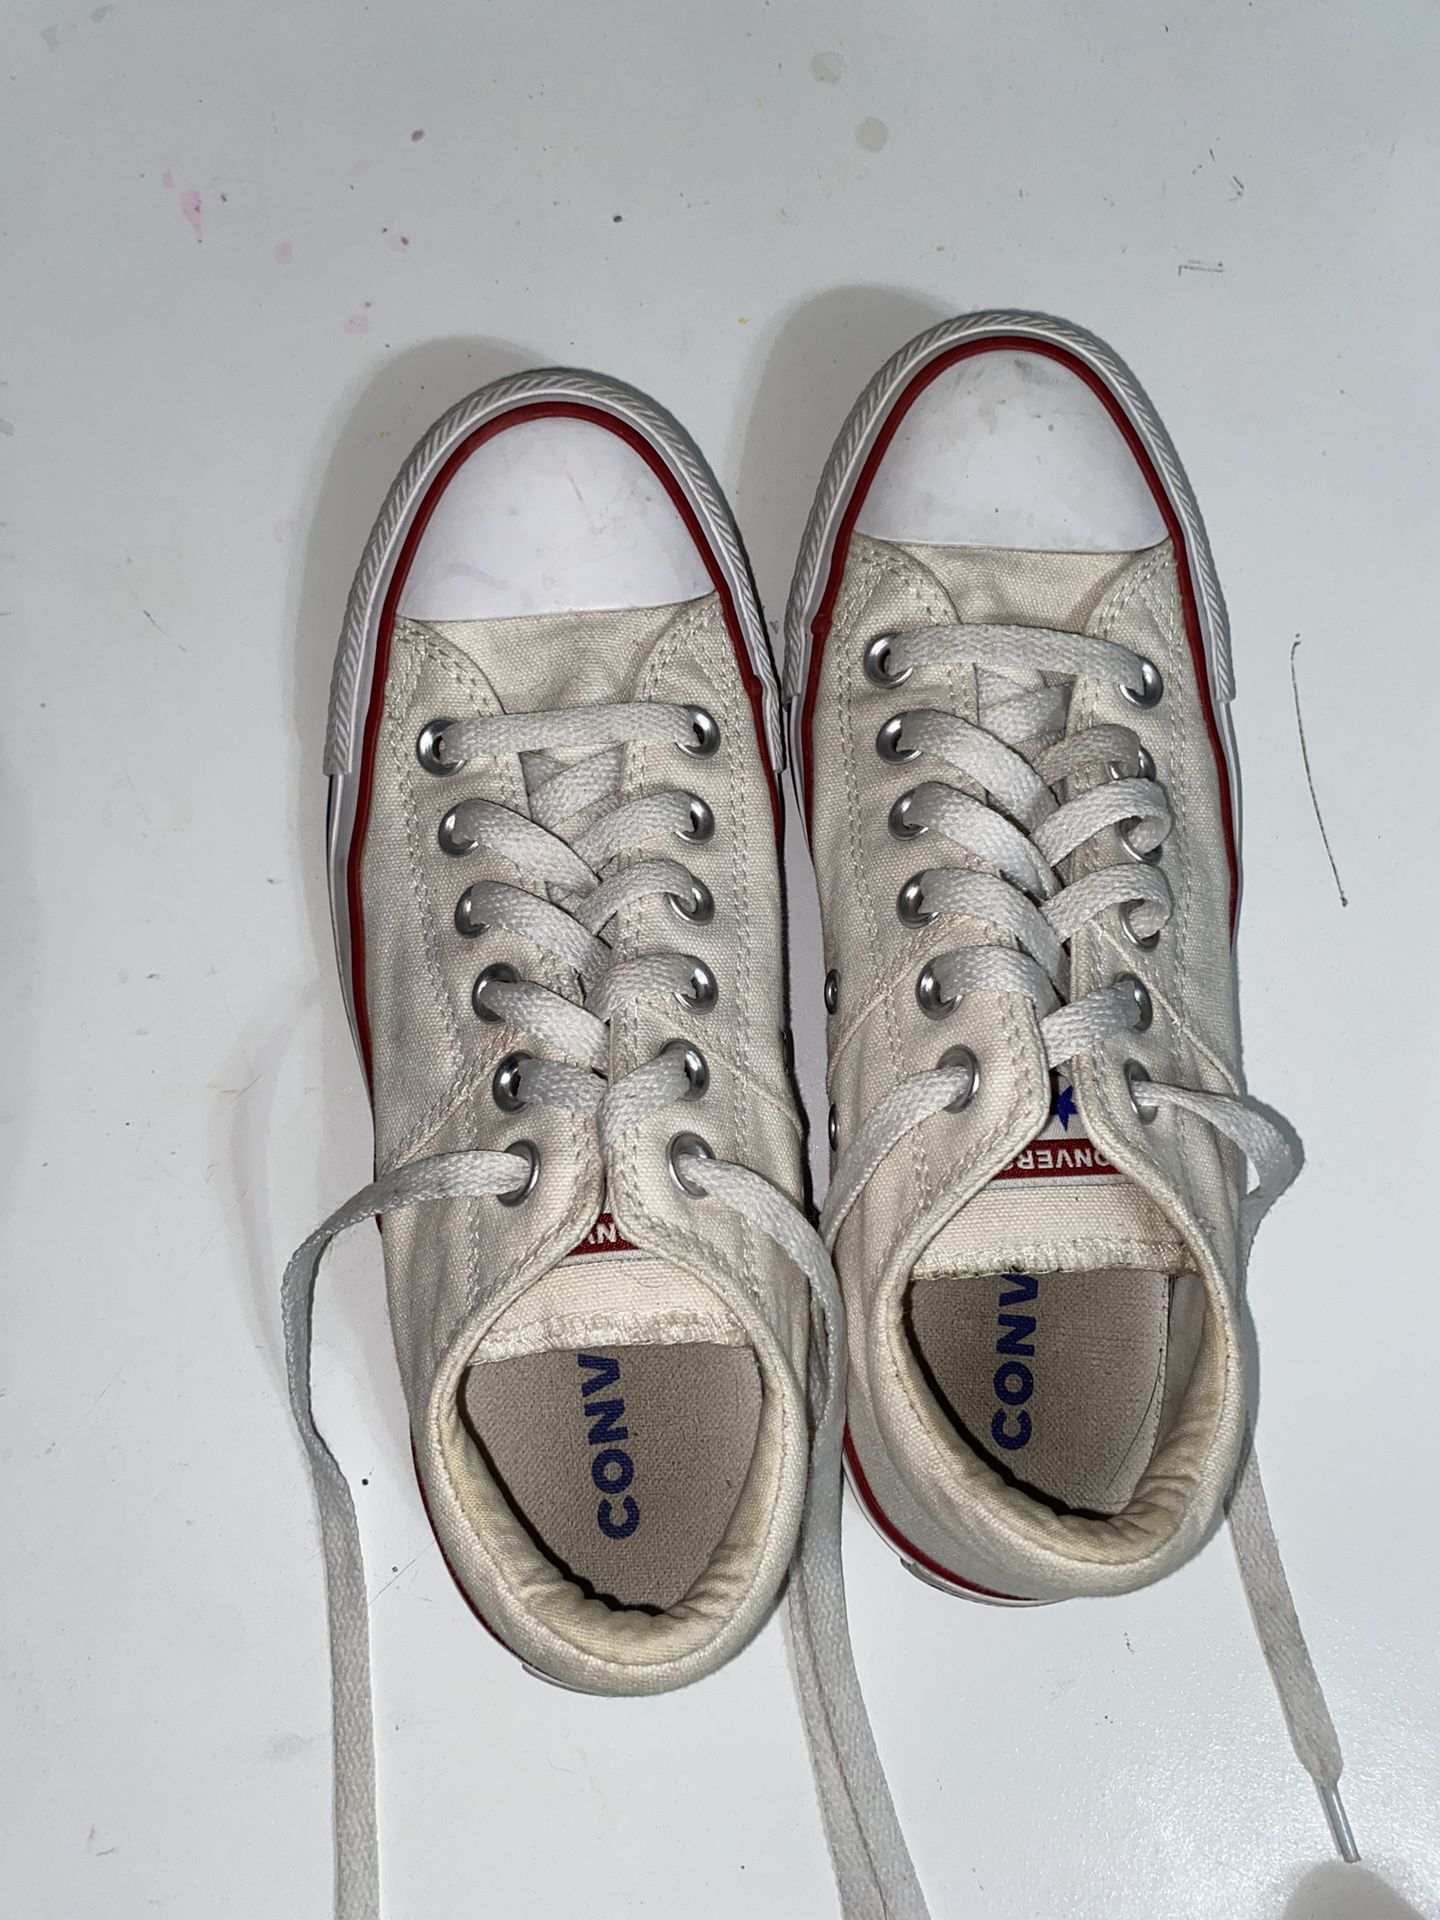 White converse size 7 